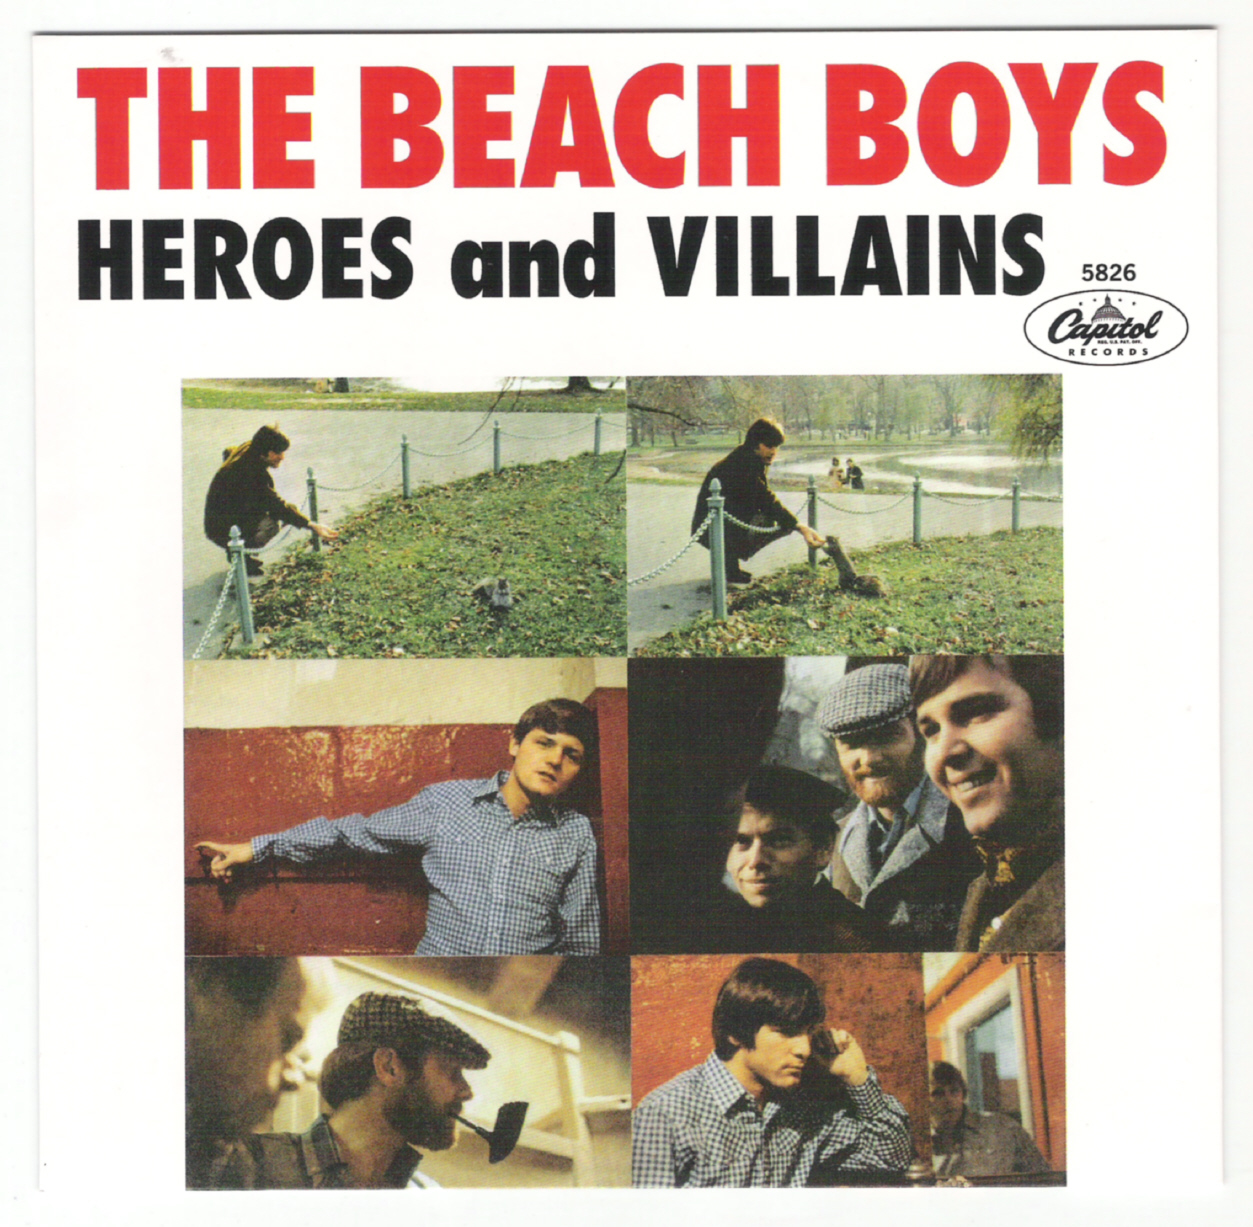 Beach Boys on 45 - US Regular issues - Capitol 2011-2012